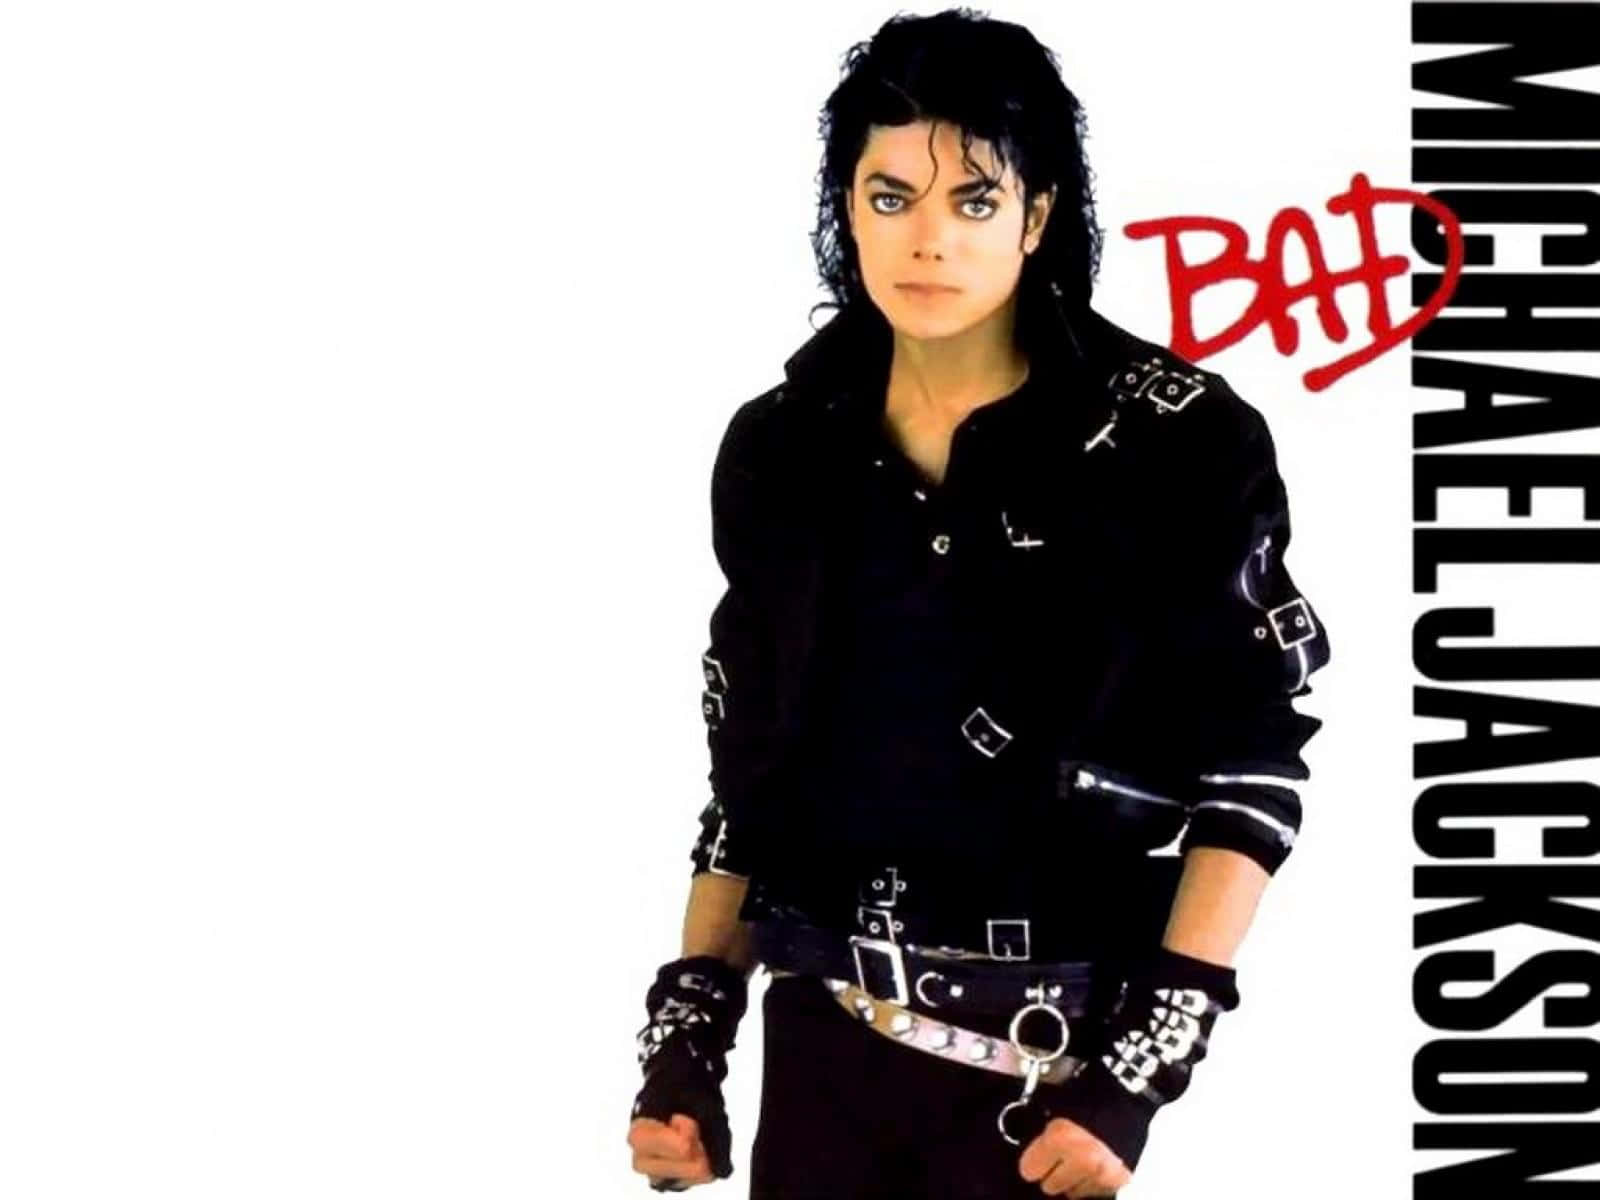 Michael Jackson Iphone 1600 X 1200 Wallpaper